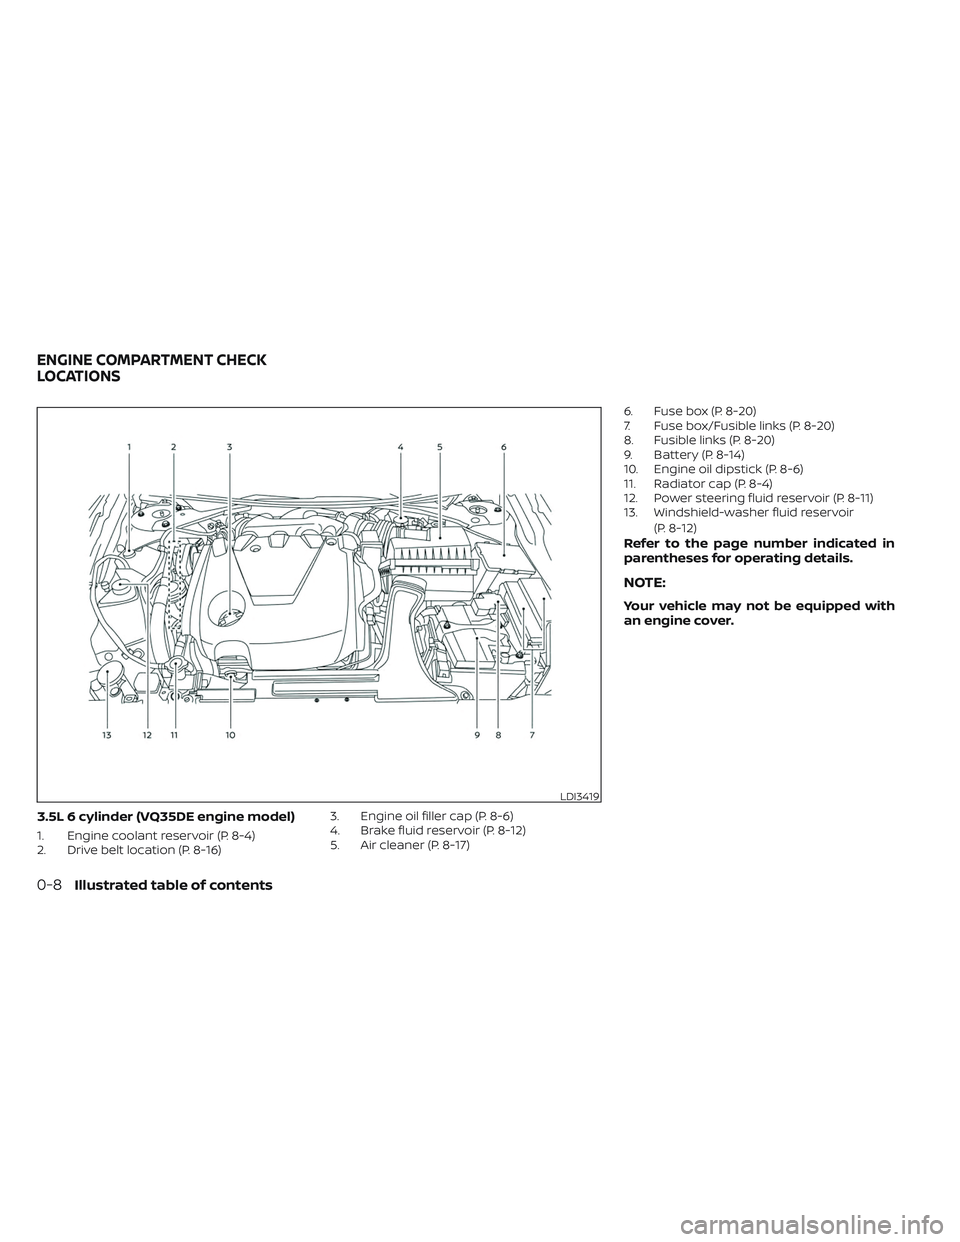 NISSAN MAXIMA 2023  Owners Manual 3.5L 6 cylinder (VQ35DE engine model)
1. Engine coolant reservoir (P. 8-4)
2. Drive belt location (P. 8-16)3. Engine oil filler cap (P. 8-6)
4. Brake fluid reservoir (P. 8-12)
5. Air cleaner (P. 8-17)